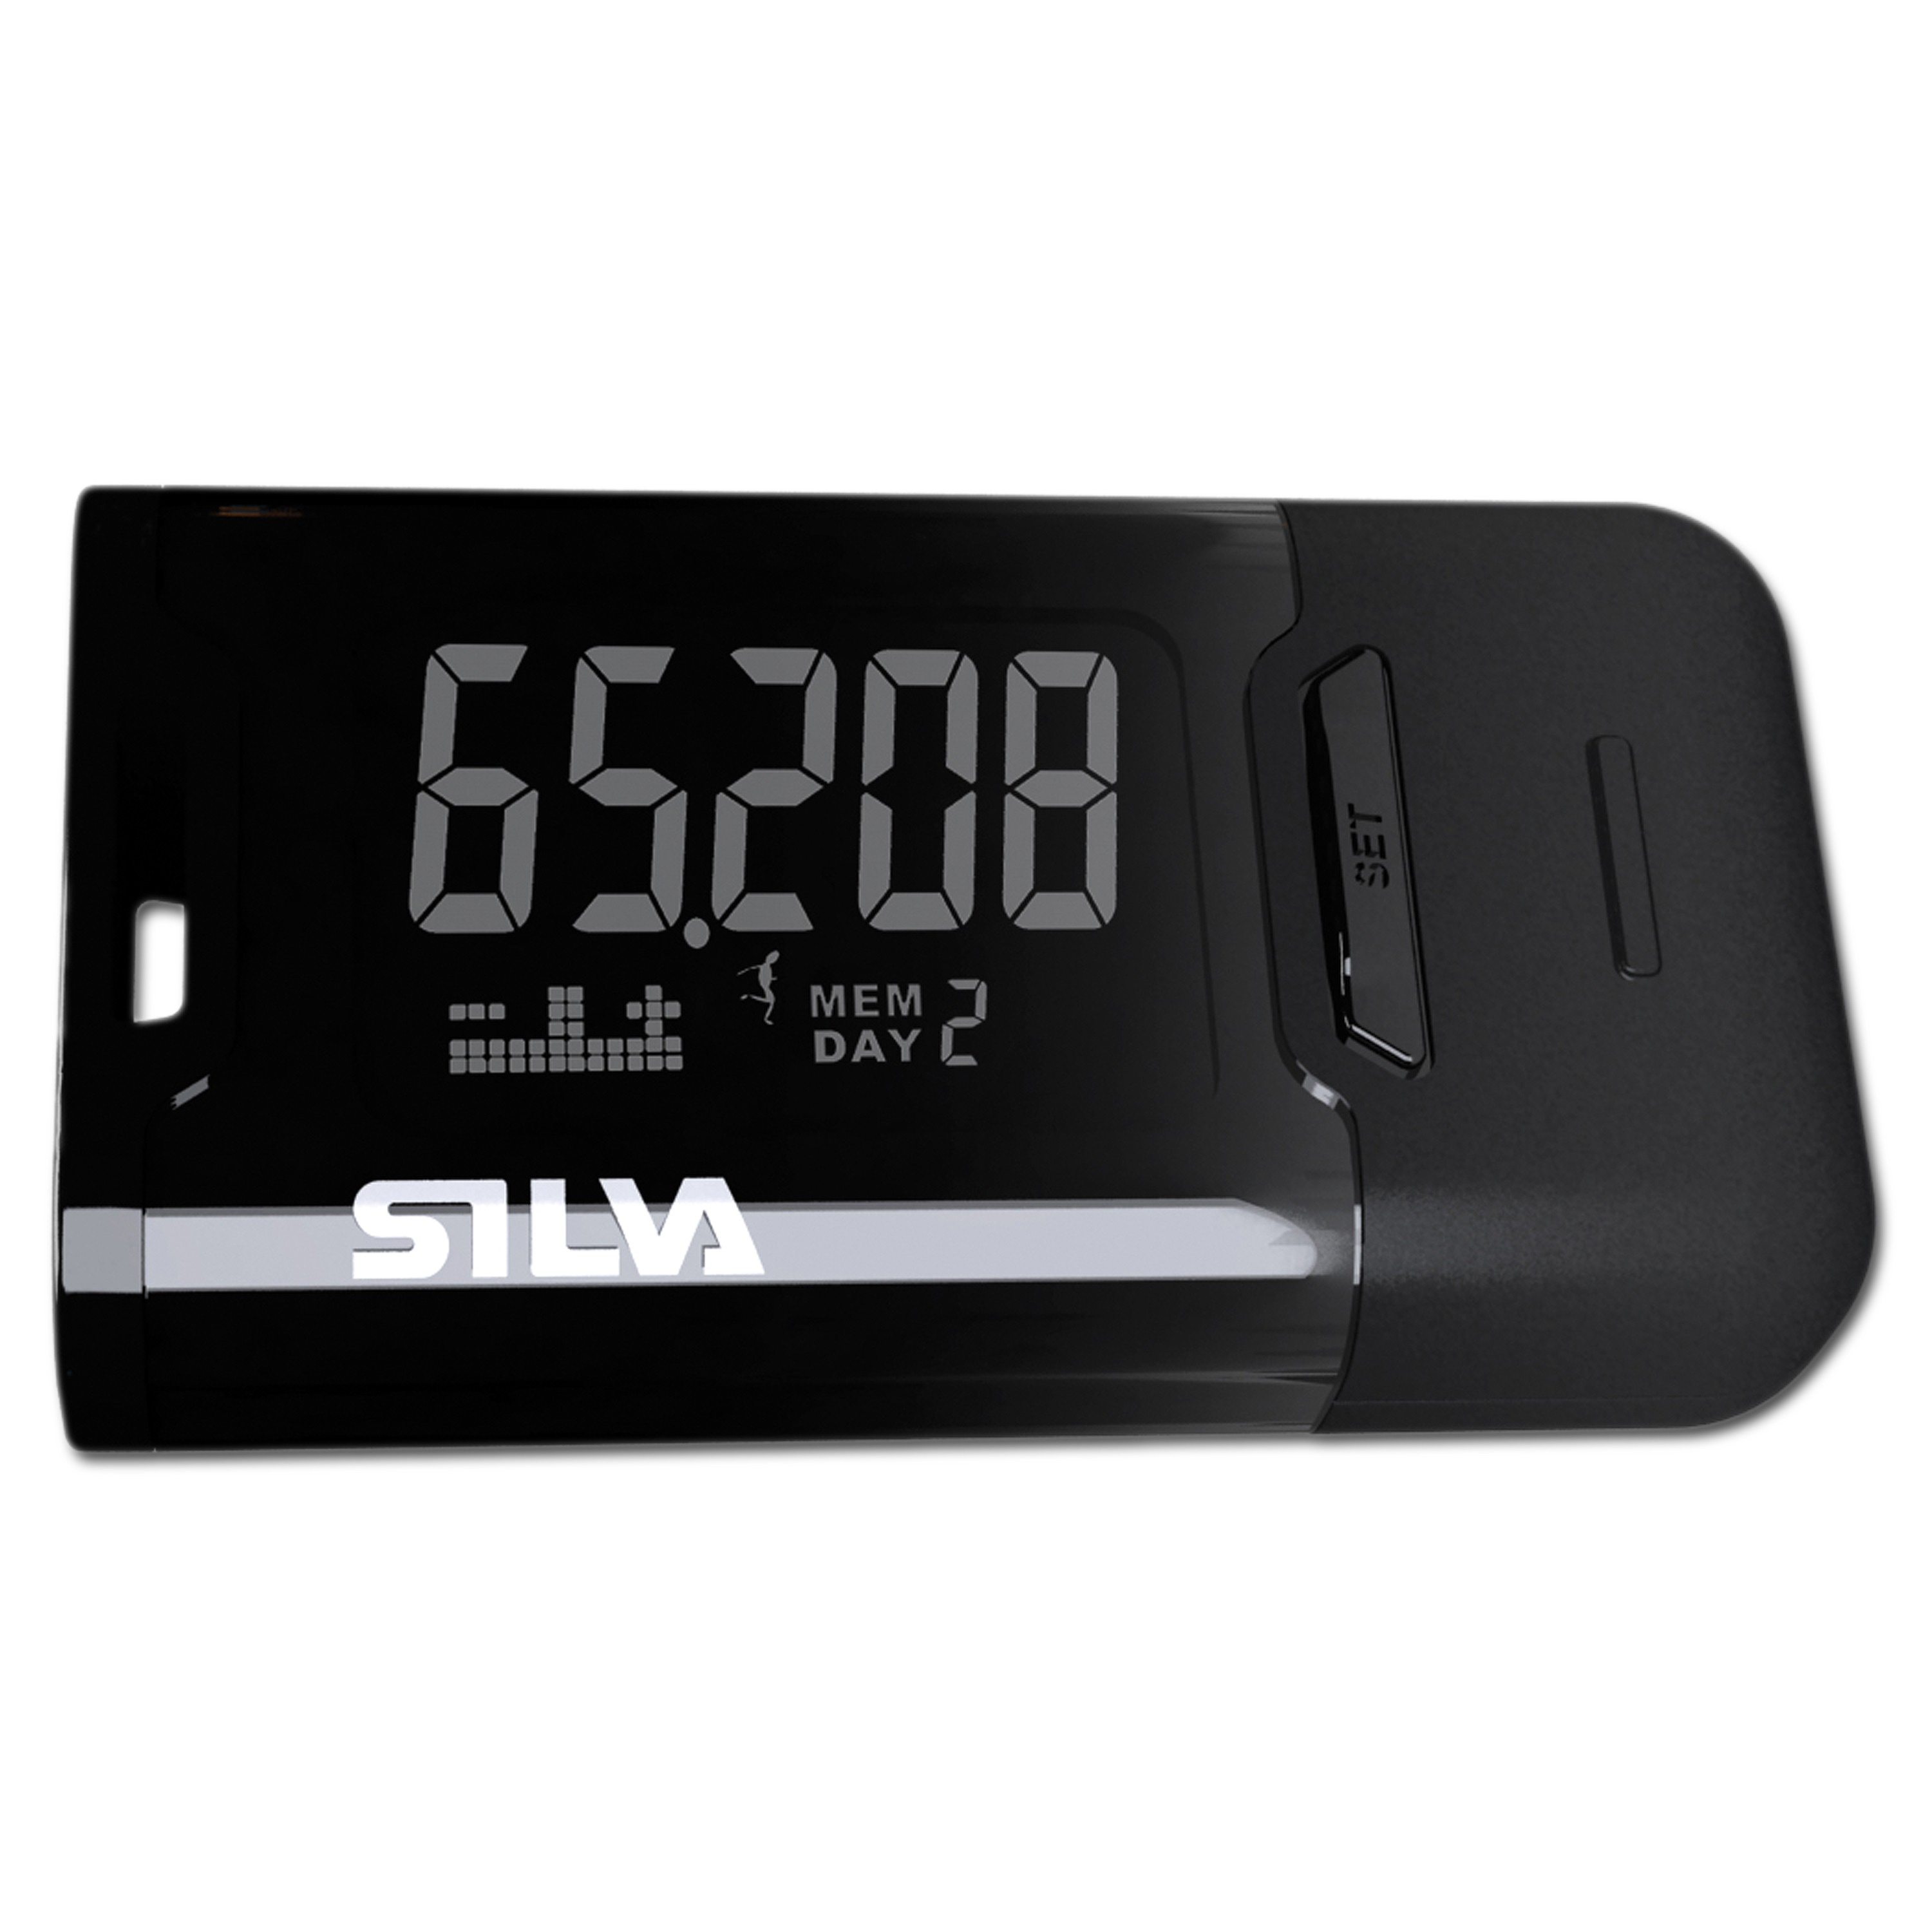 Silva Schrittzähler Pedometer Ex30